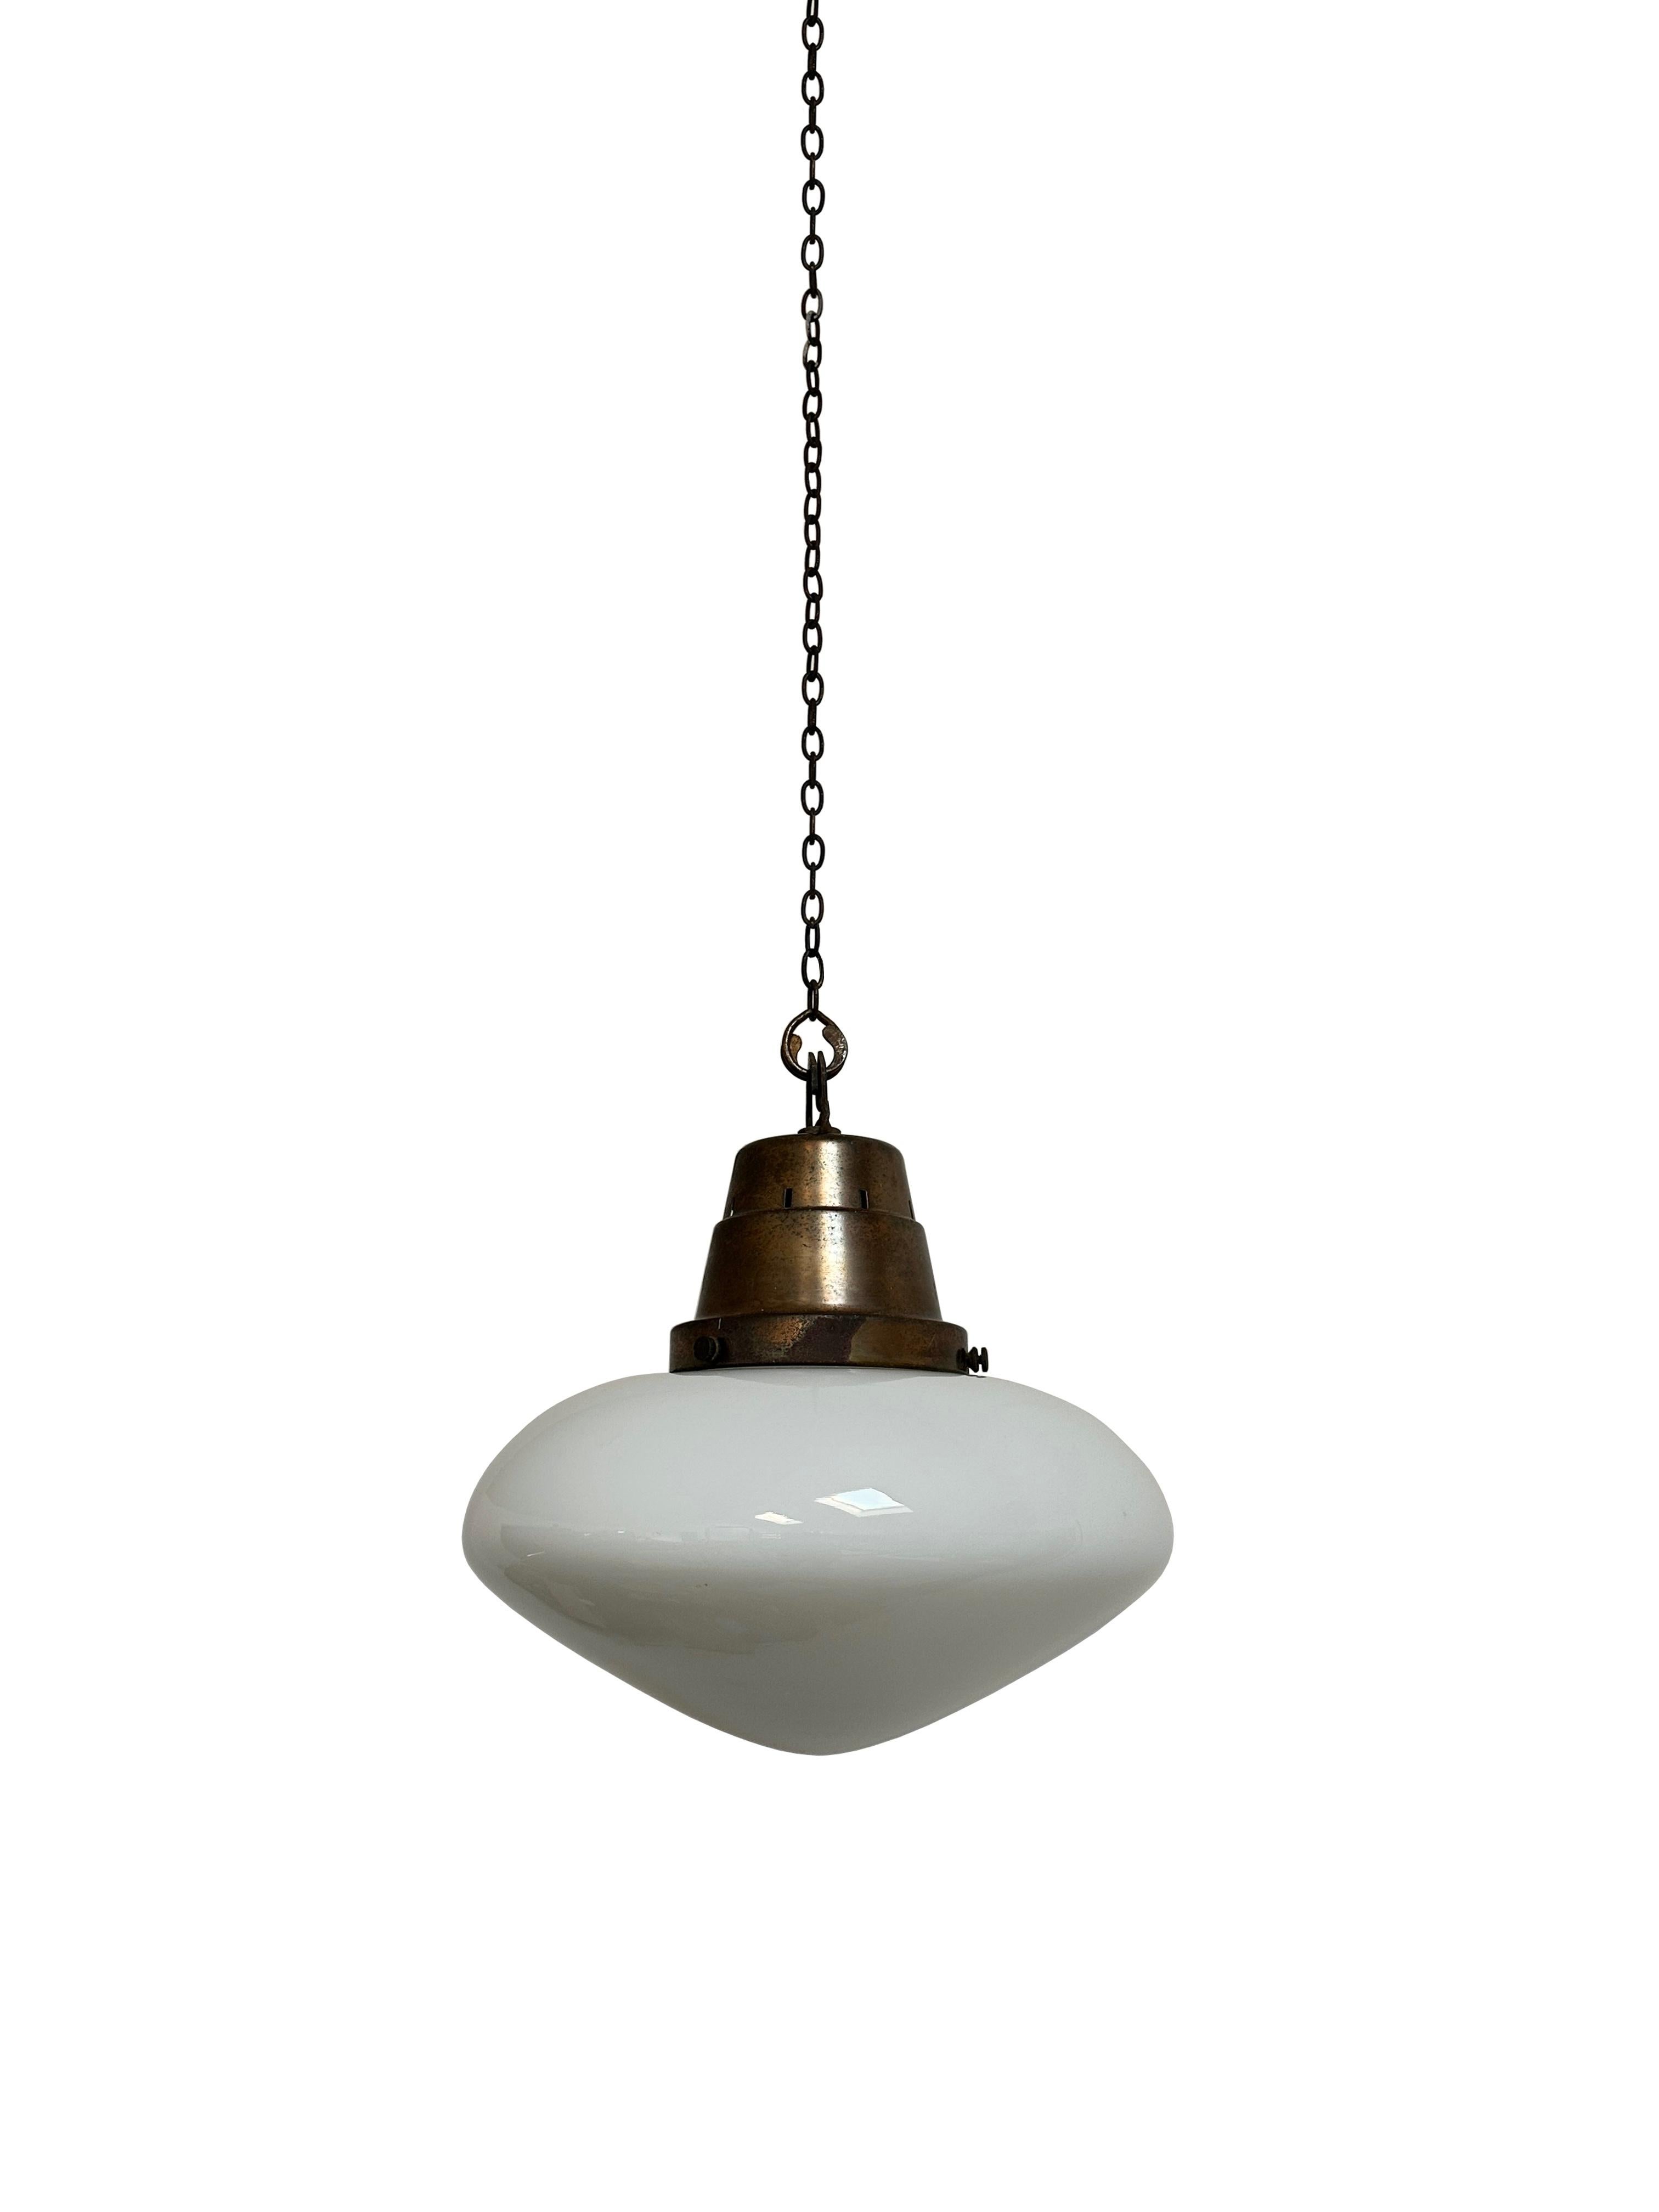 British Antique Vintage Copper Ovaloid Opaline Milk Glass Ceiling Pendant Light Lamp For Sale